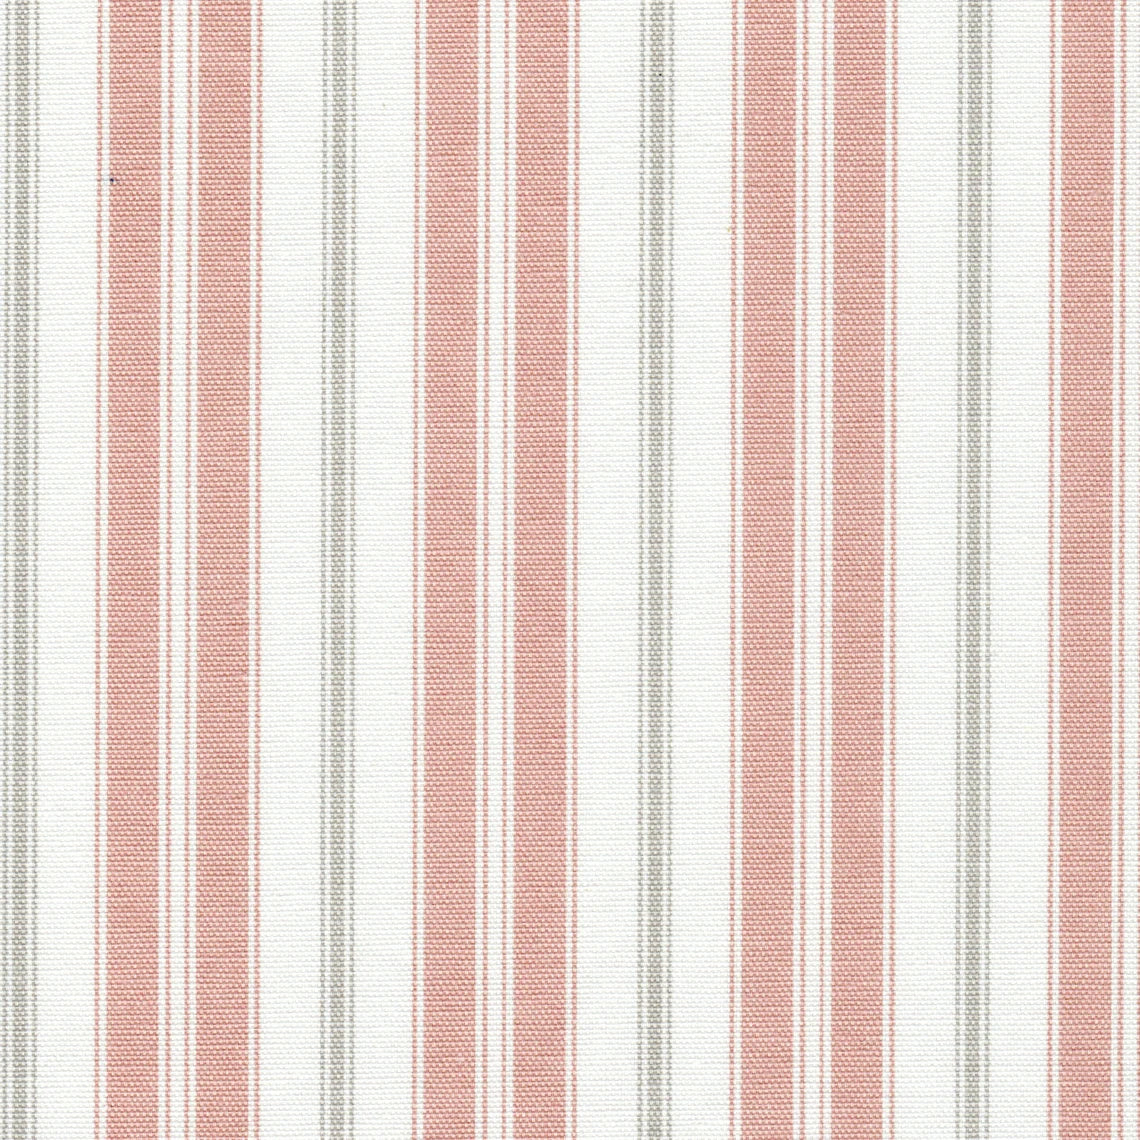 duvet cover in newbury blush stripe- pink, gray, white